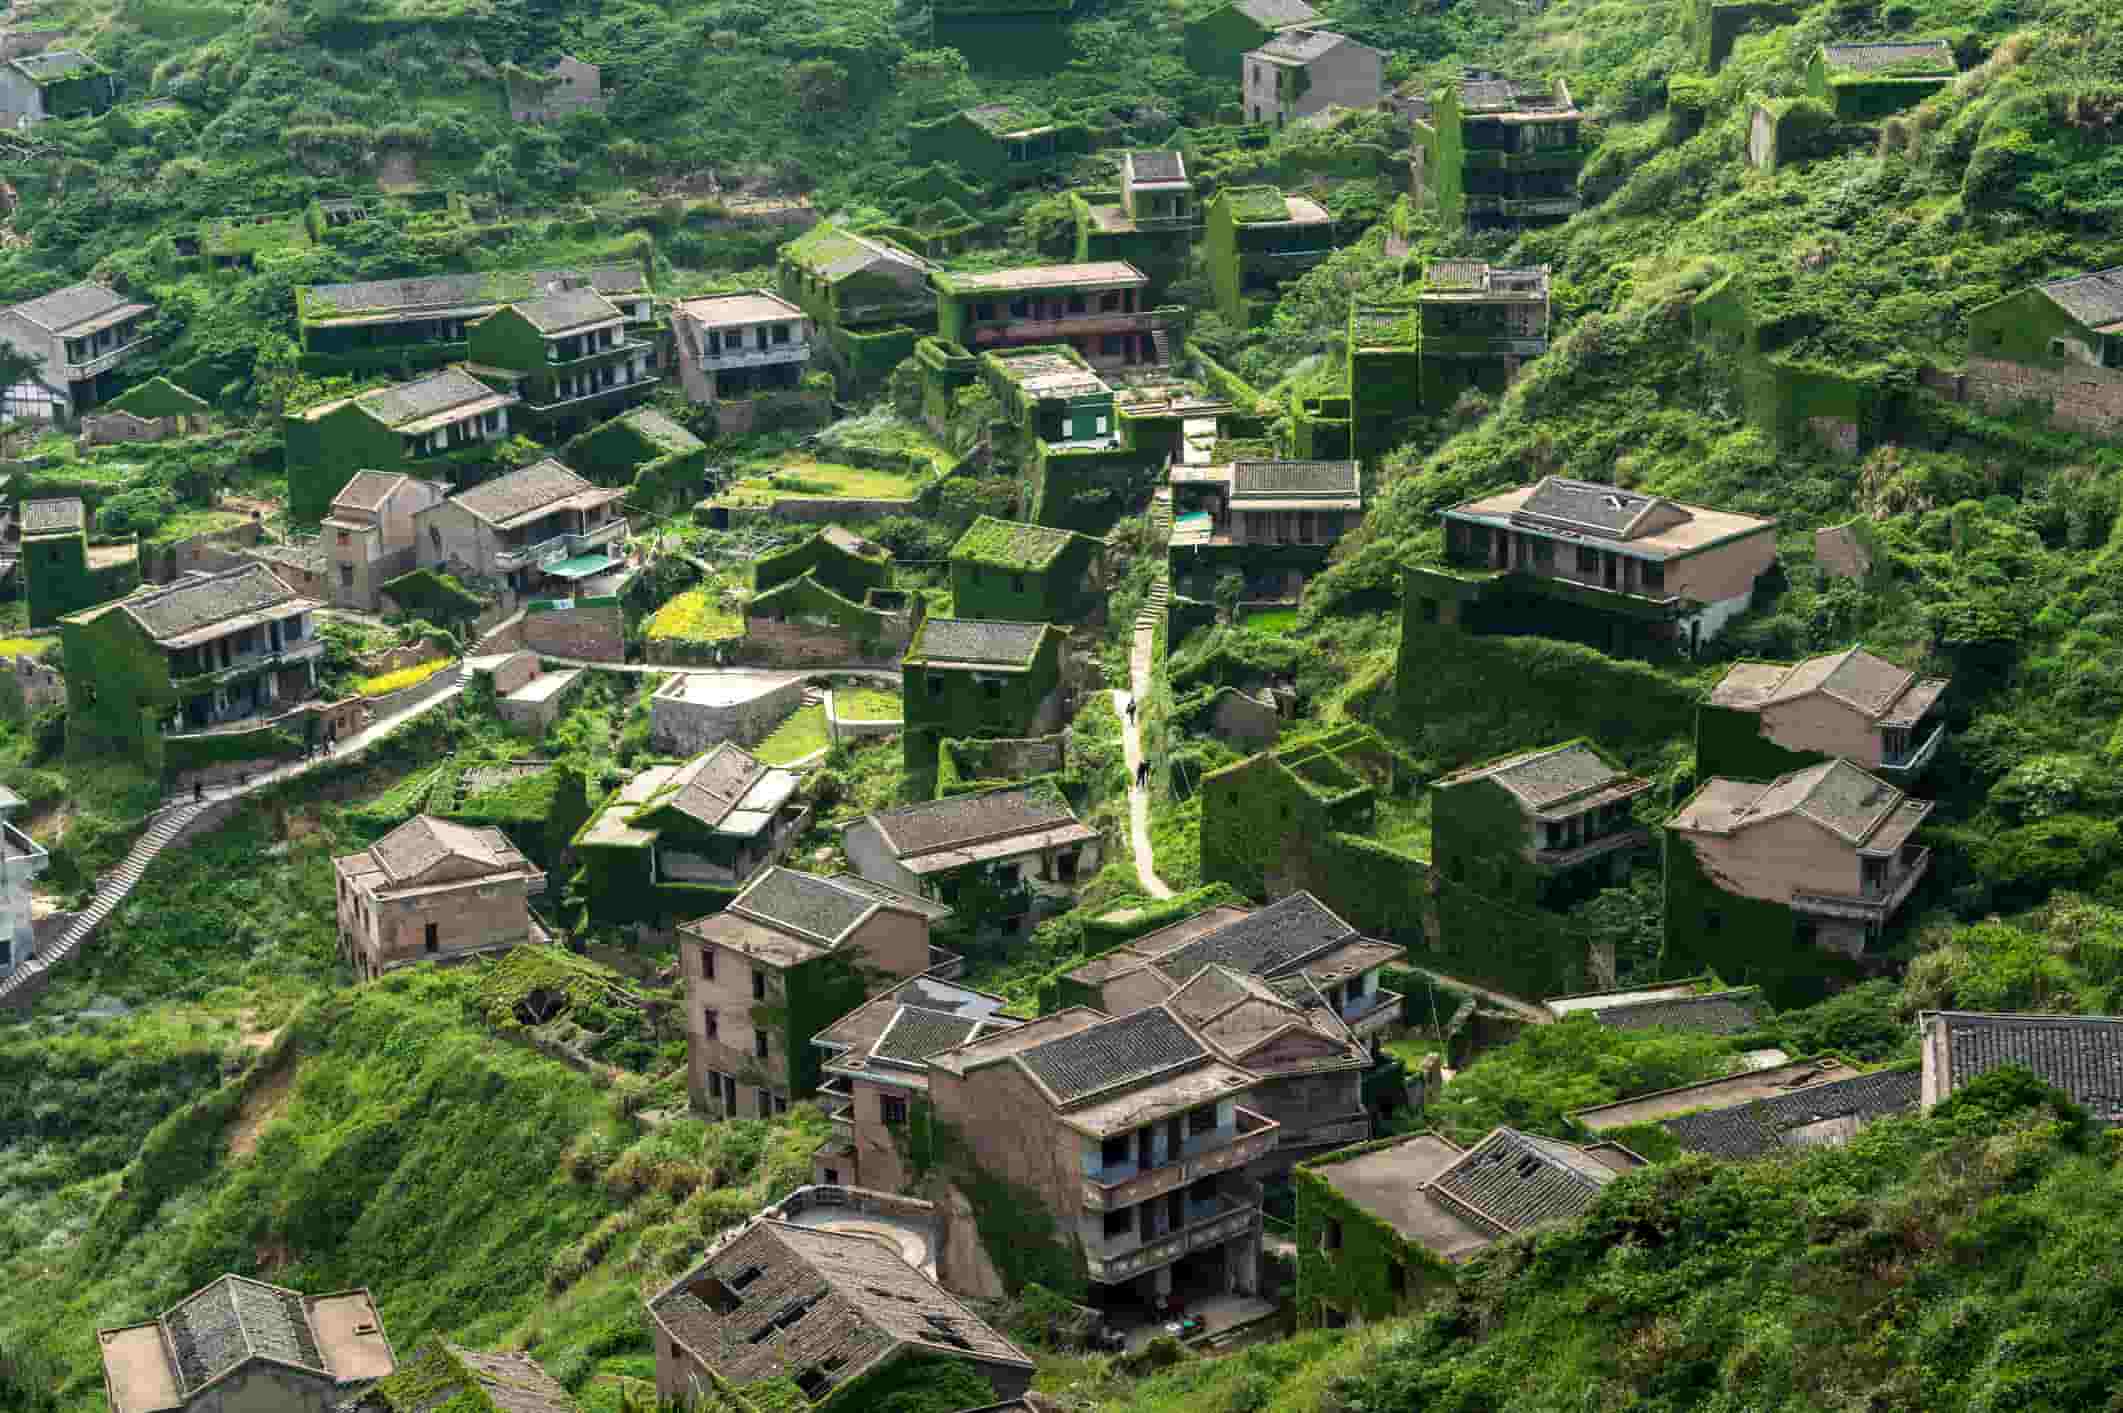 Houtouwan village in China